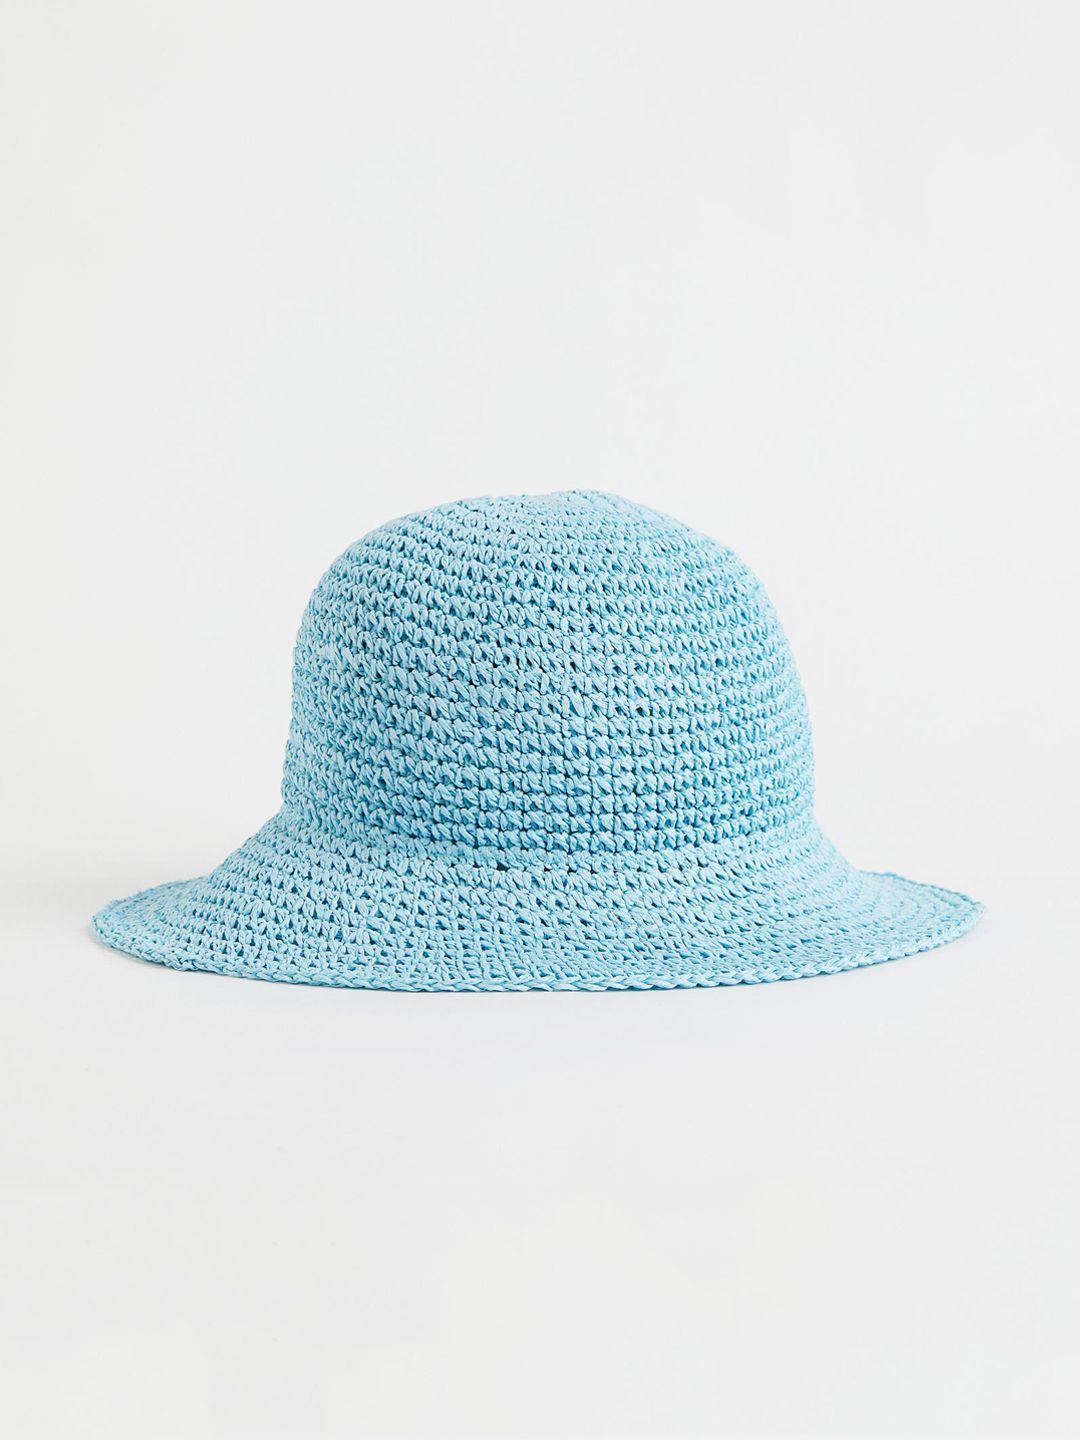 H&M Women Blue Sun Hat Price in India